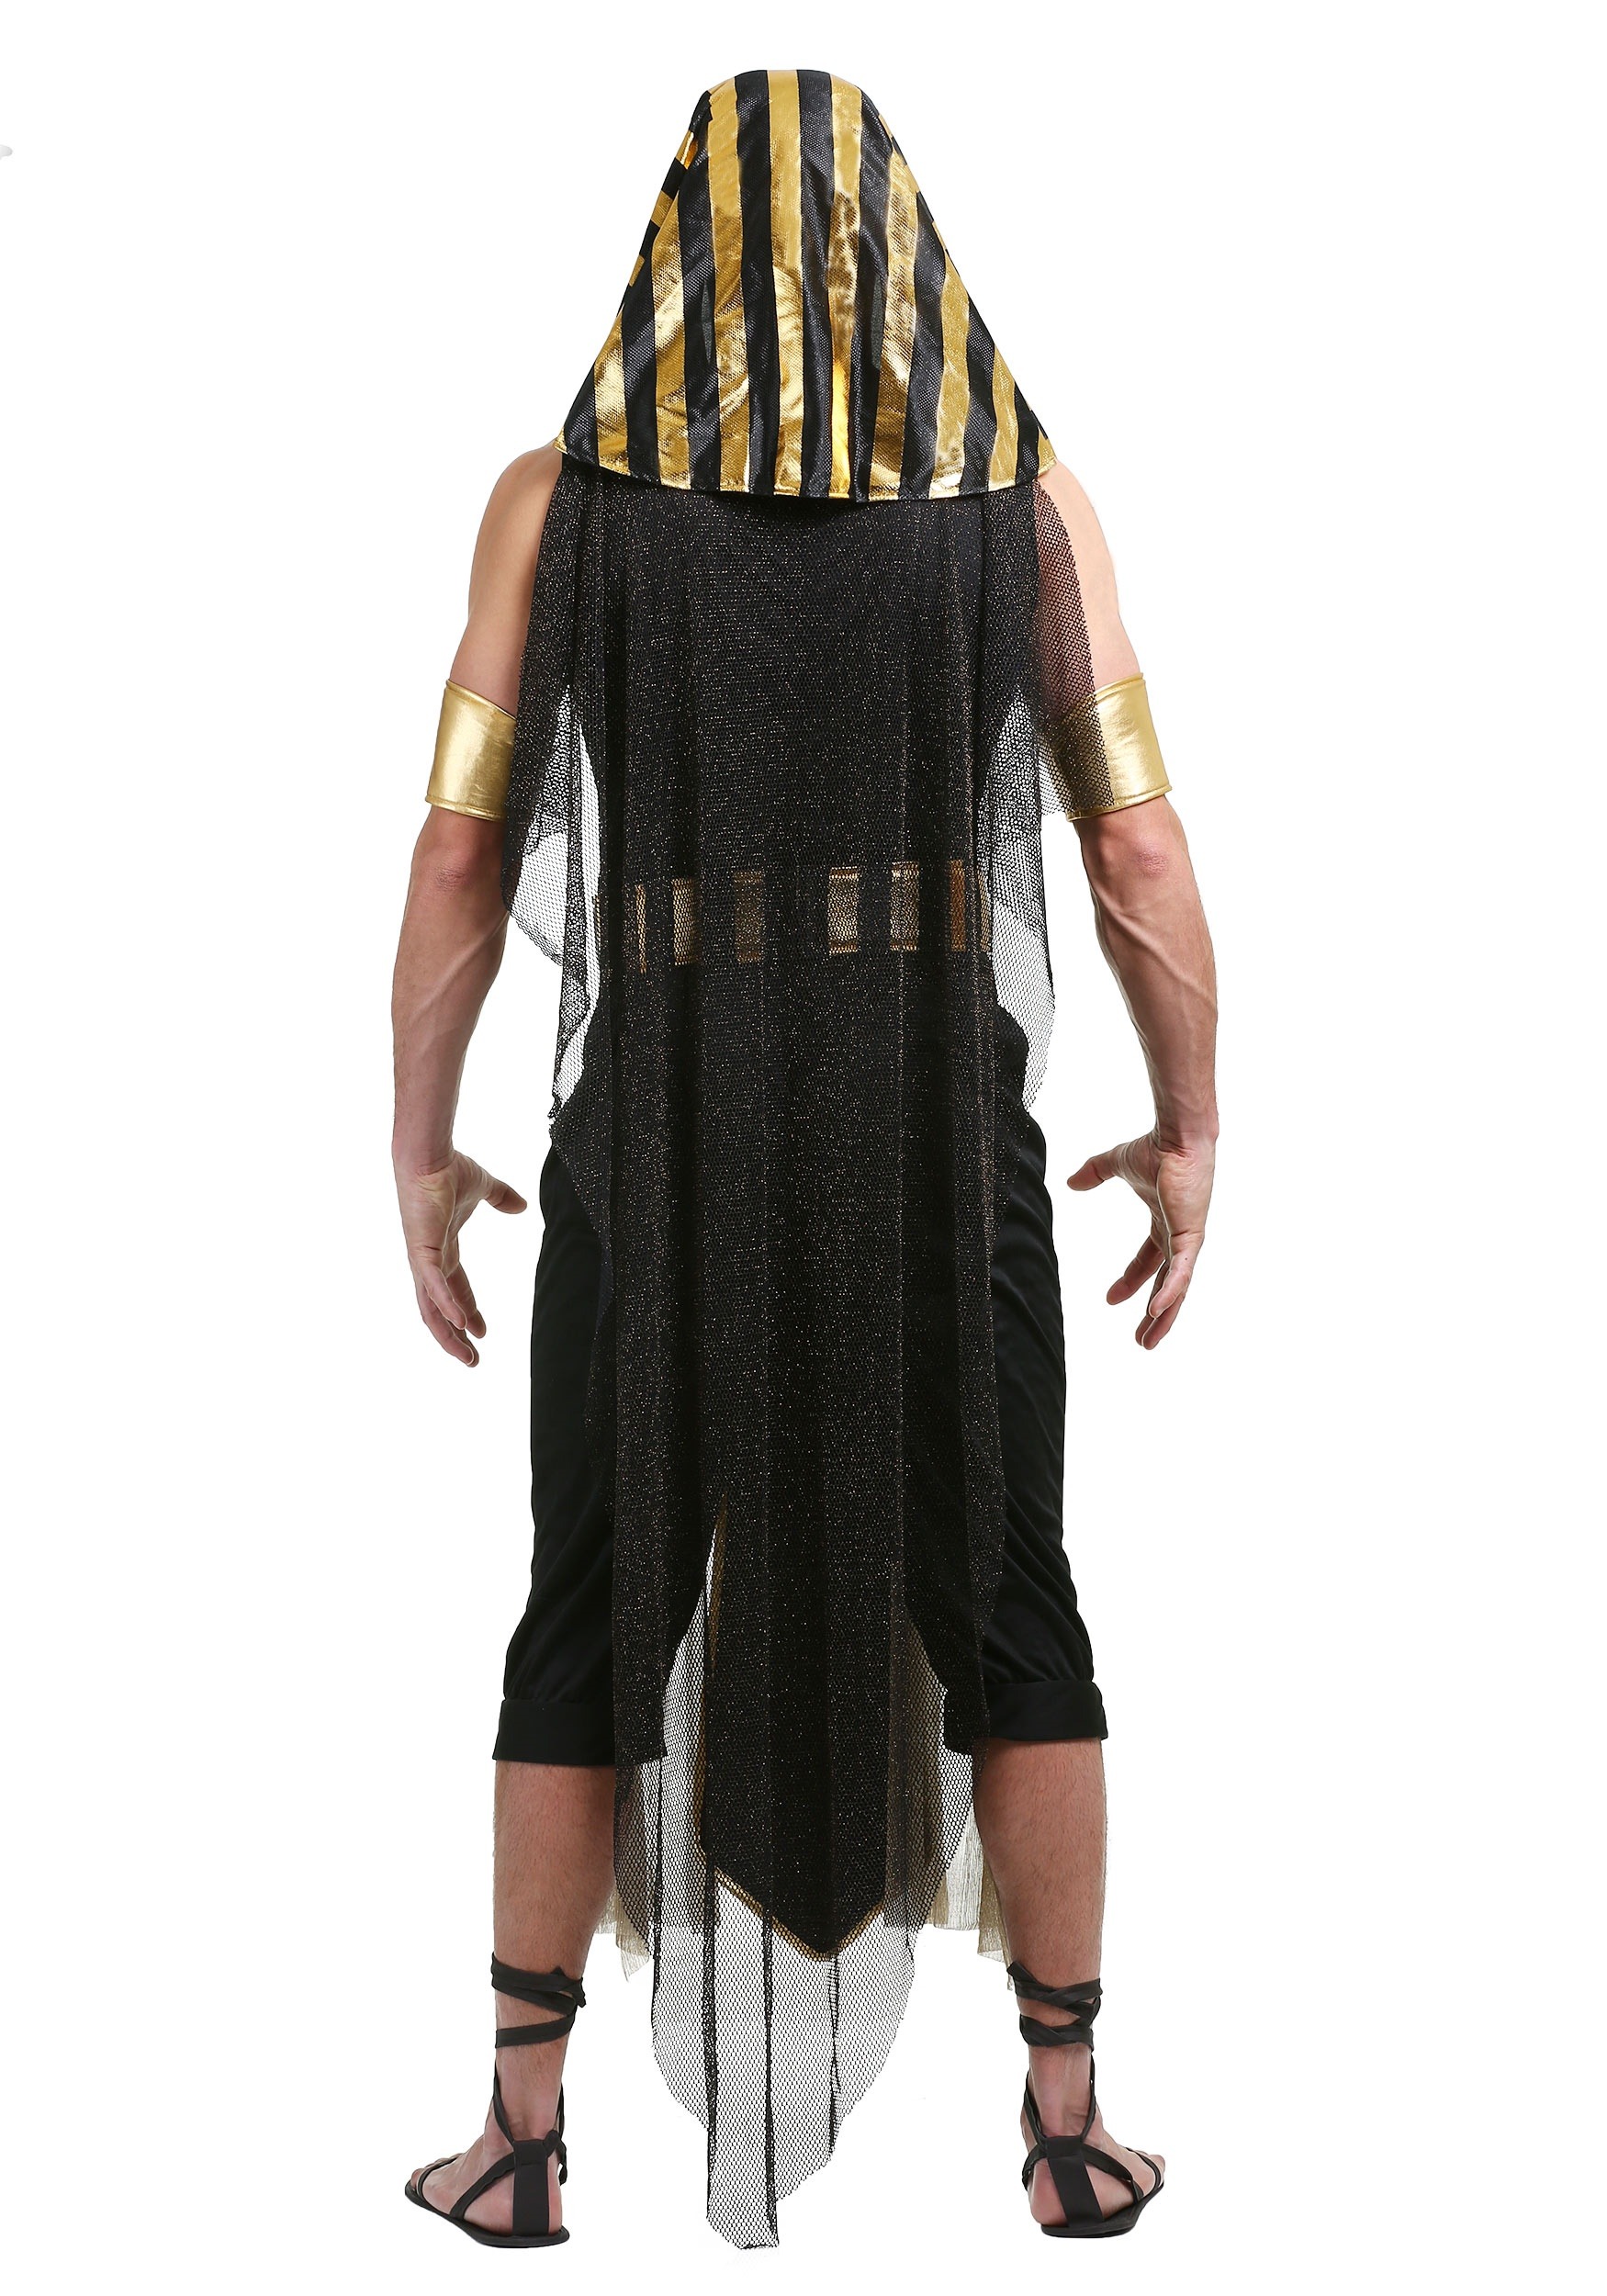 All Powerful Pharaoh Plus Size Fancy Dress Costume , Men's Plus Size Fancy Dress Costumes